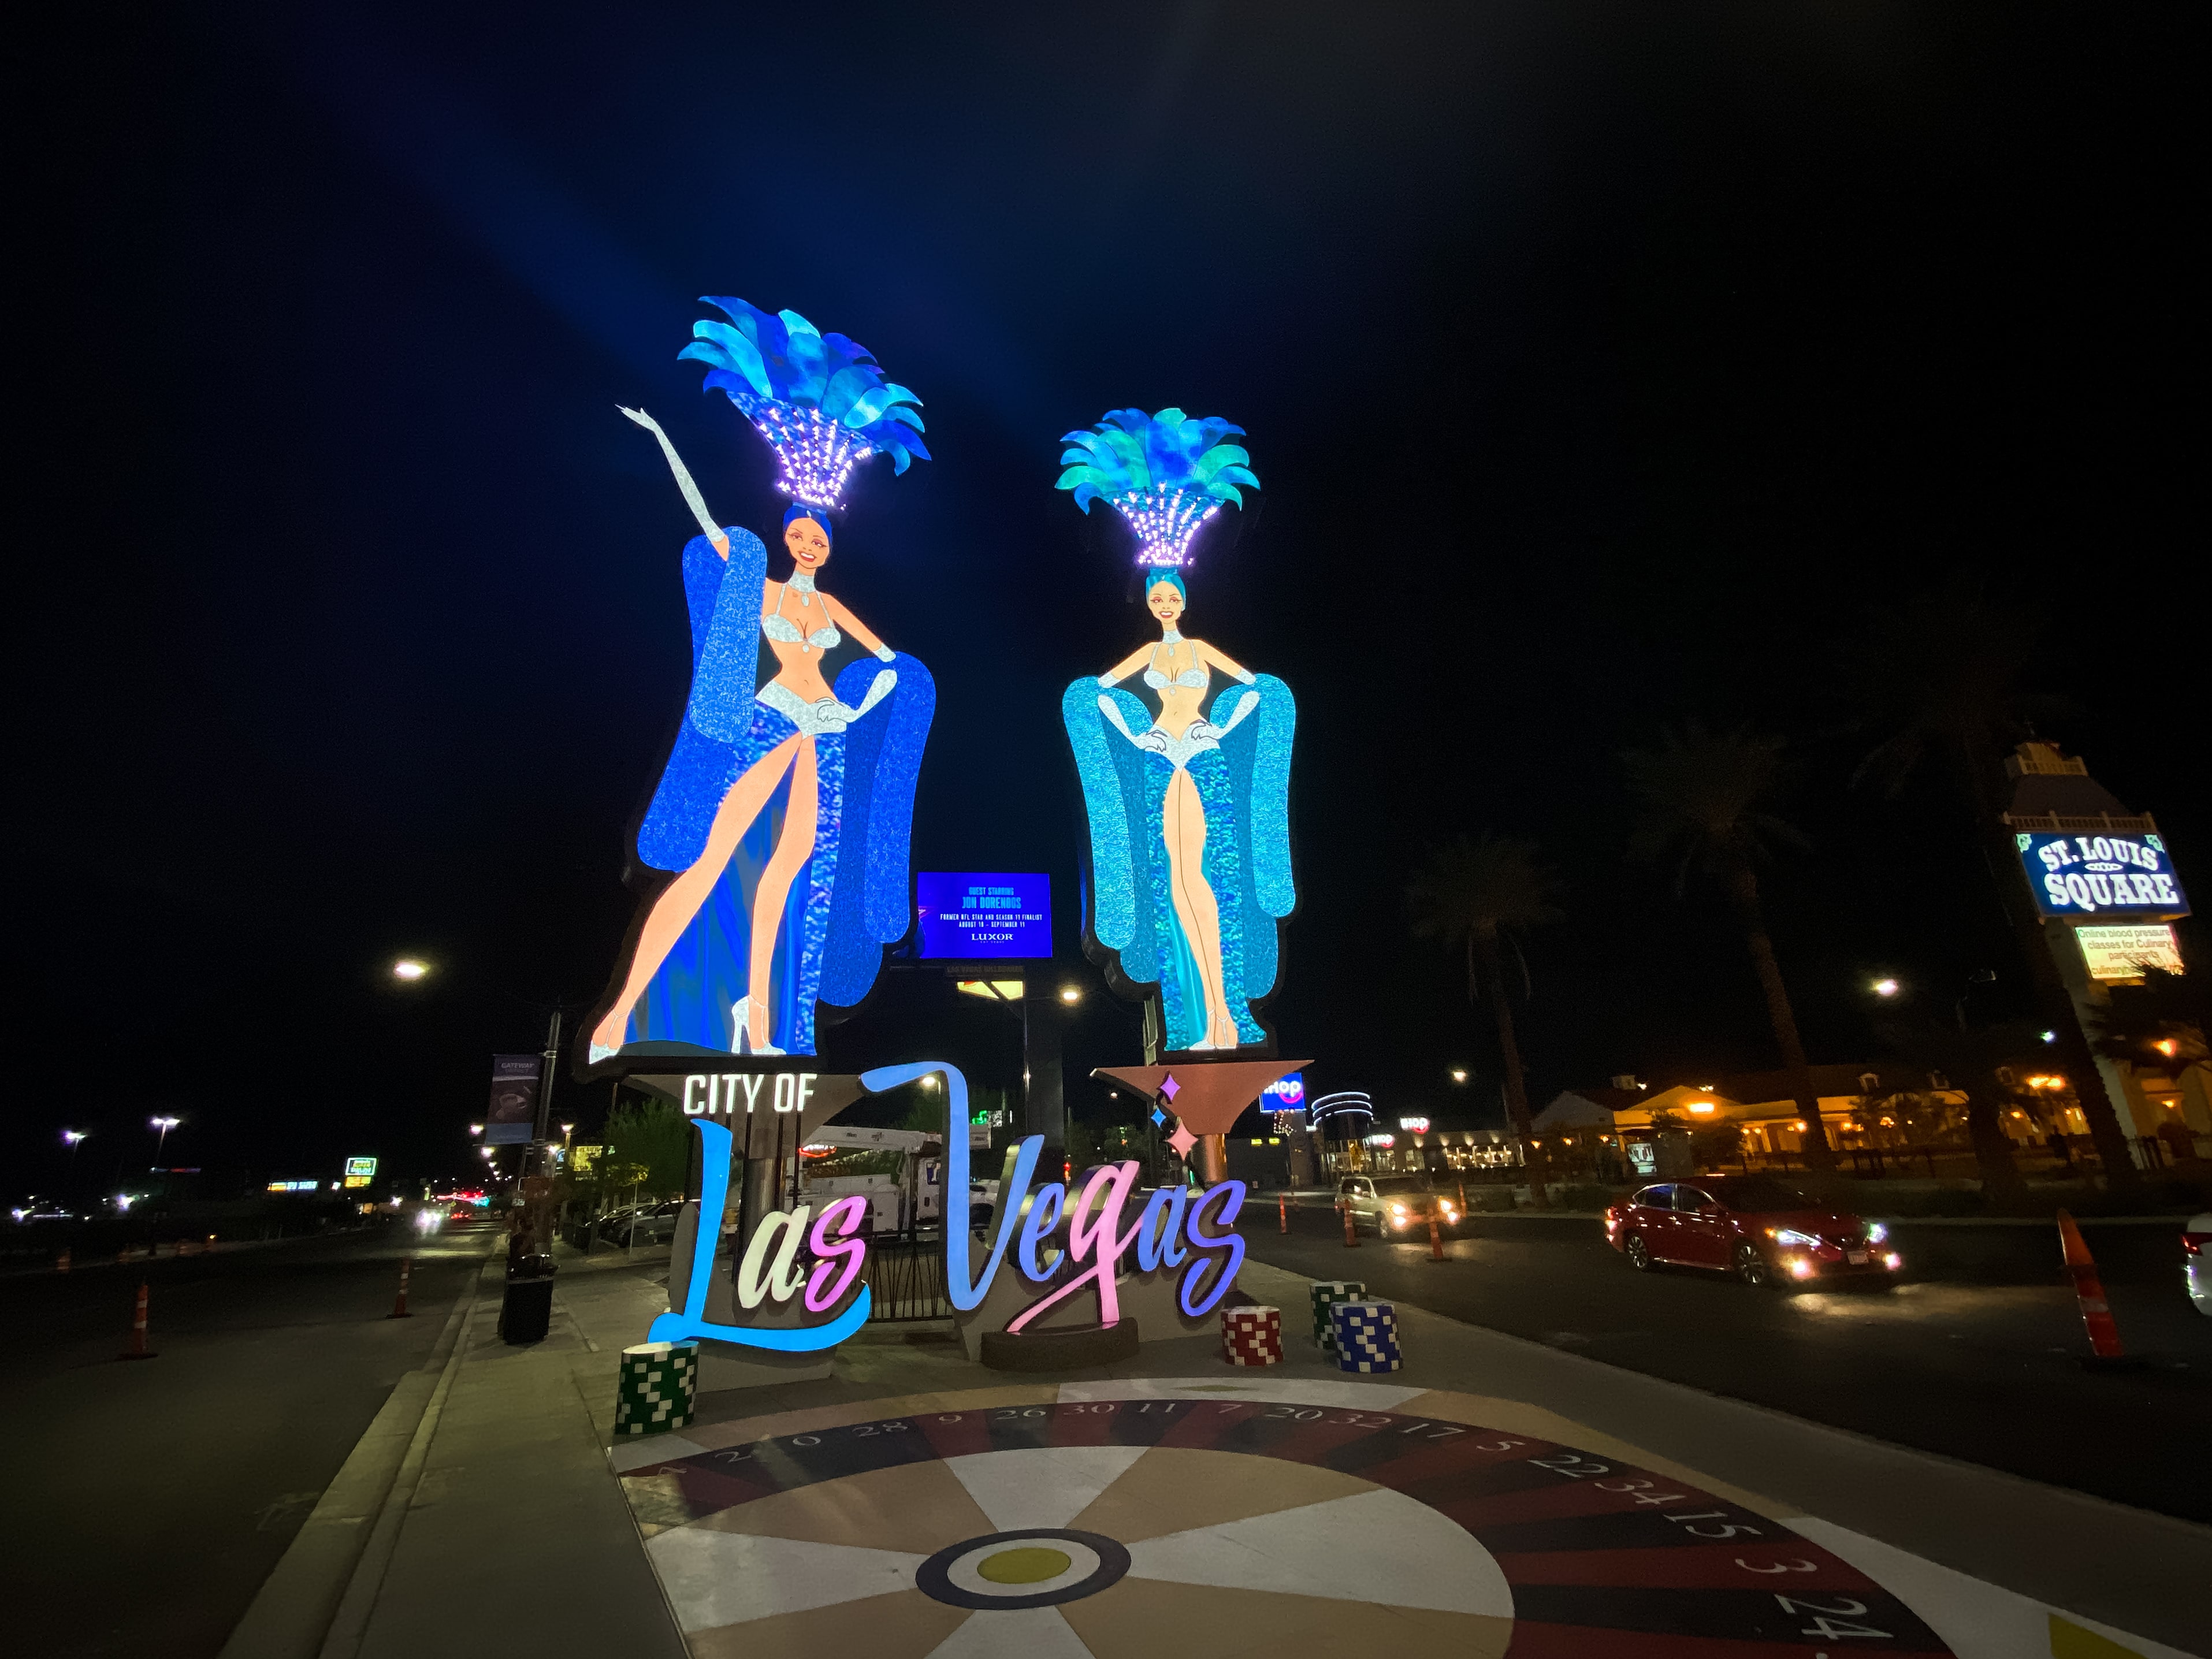 showgirls city of las vegas signs at night